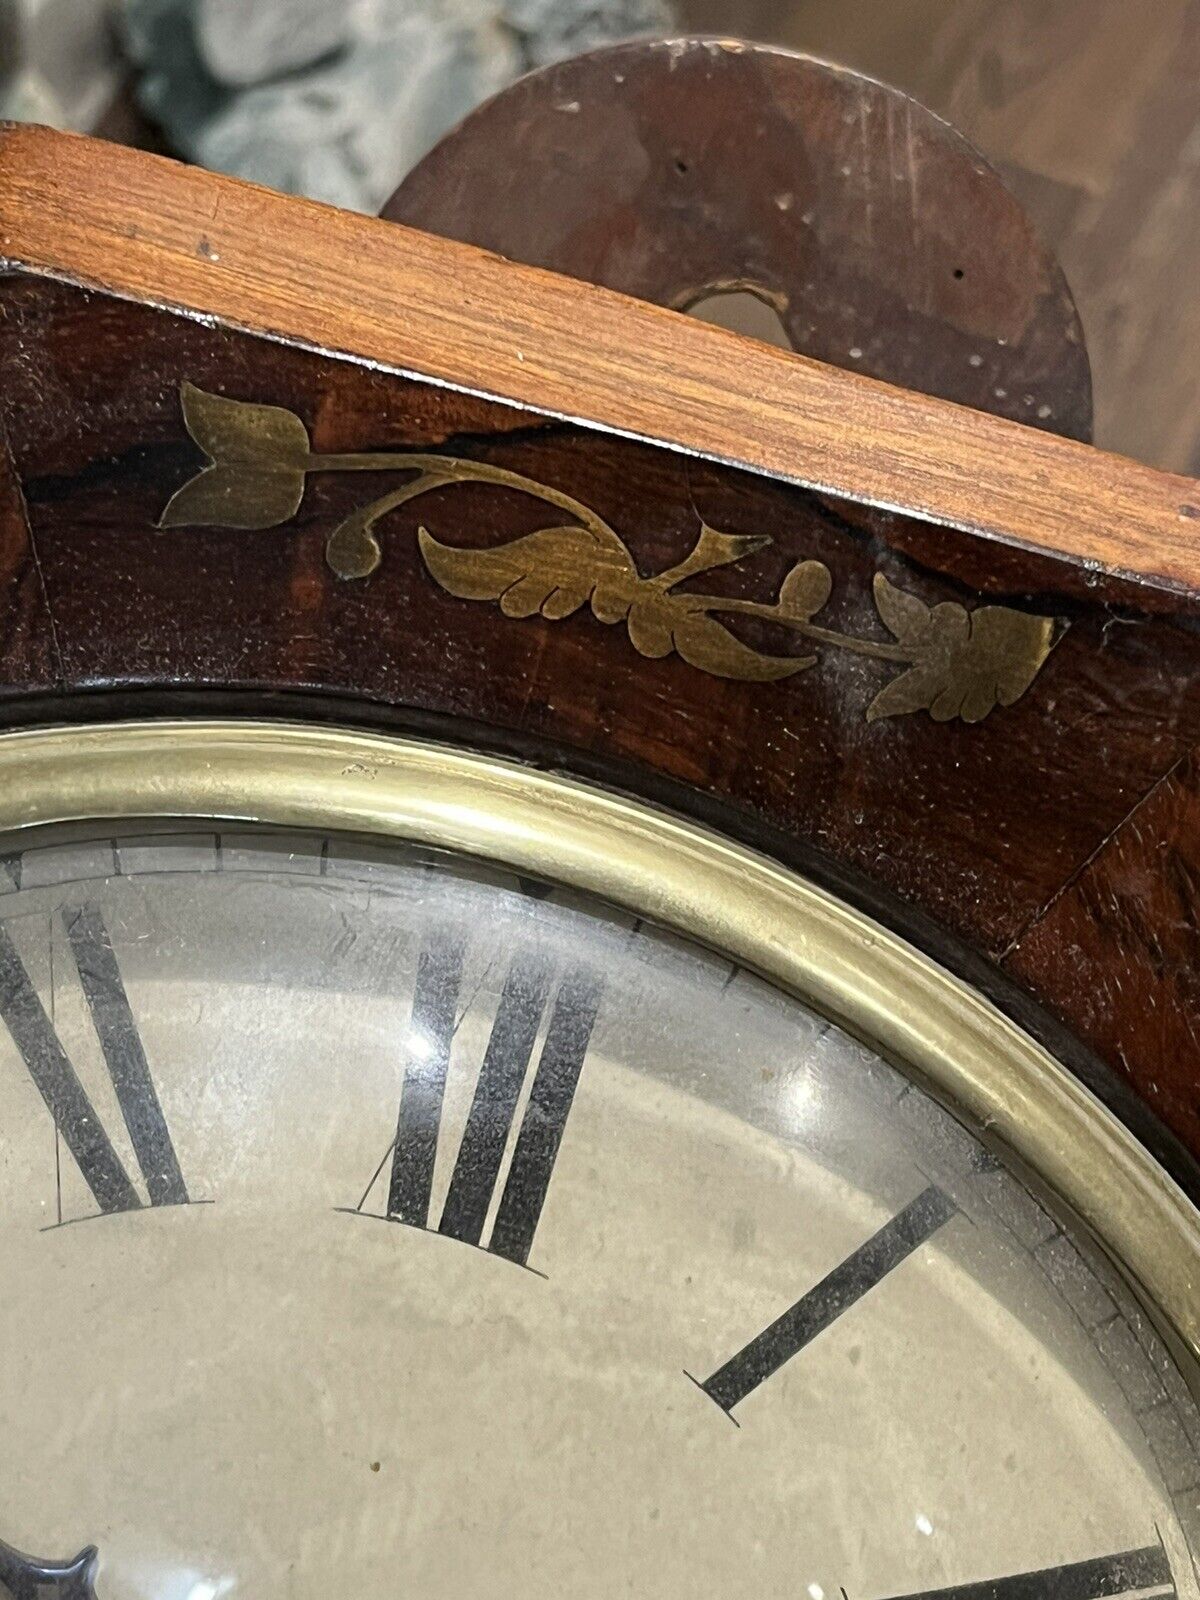 Victorian Dial Clock, Brass Inlaid Case, Convex Glass. 9 Inch Dial